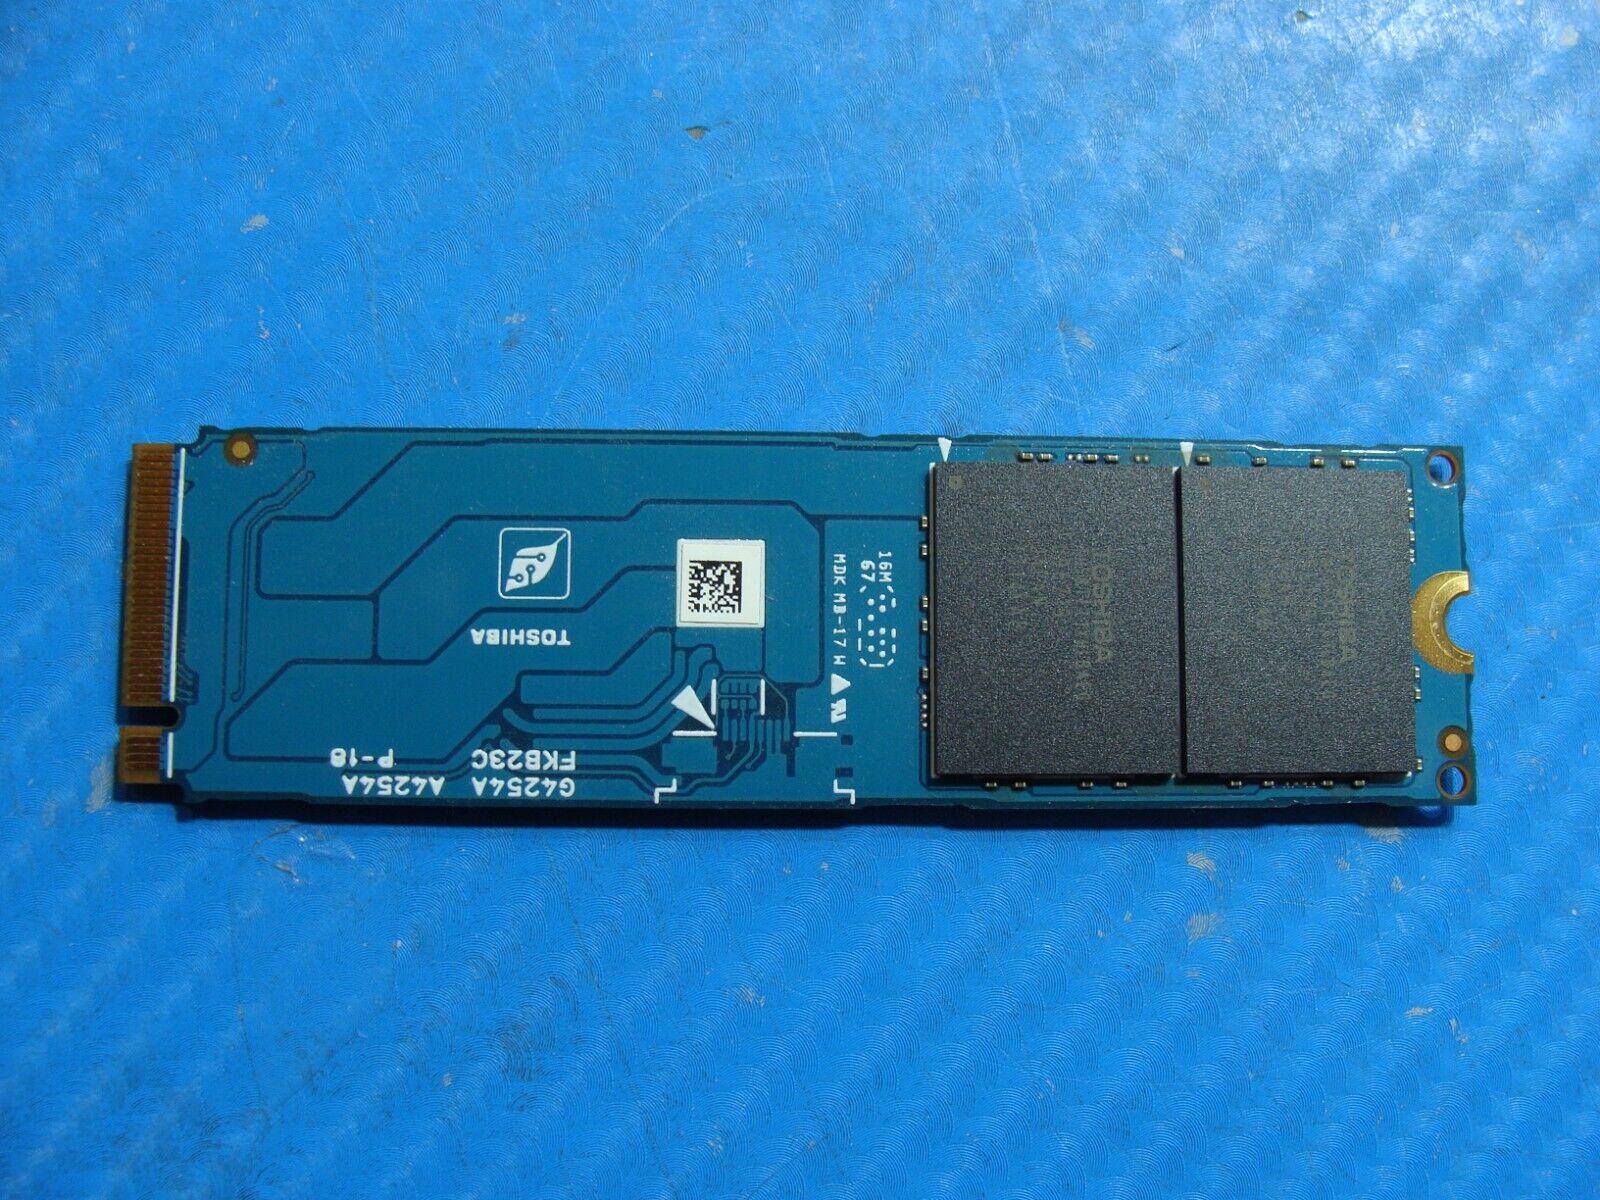 Dell XPS 15 9560 Toshiba M.2 NVME 1TB SSD THNSN51T02DUK NPFCP